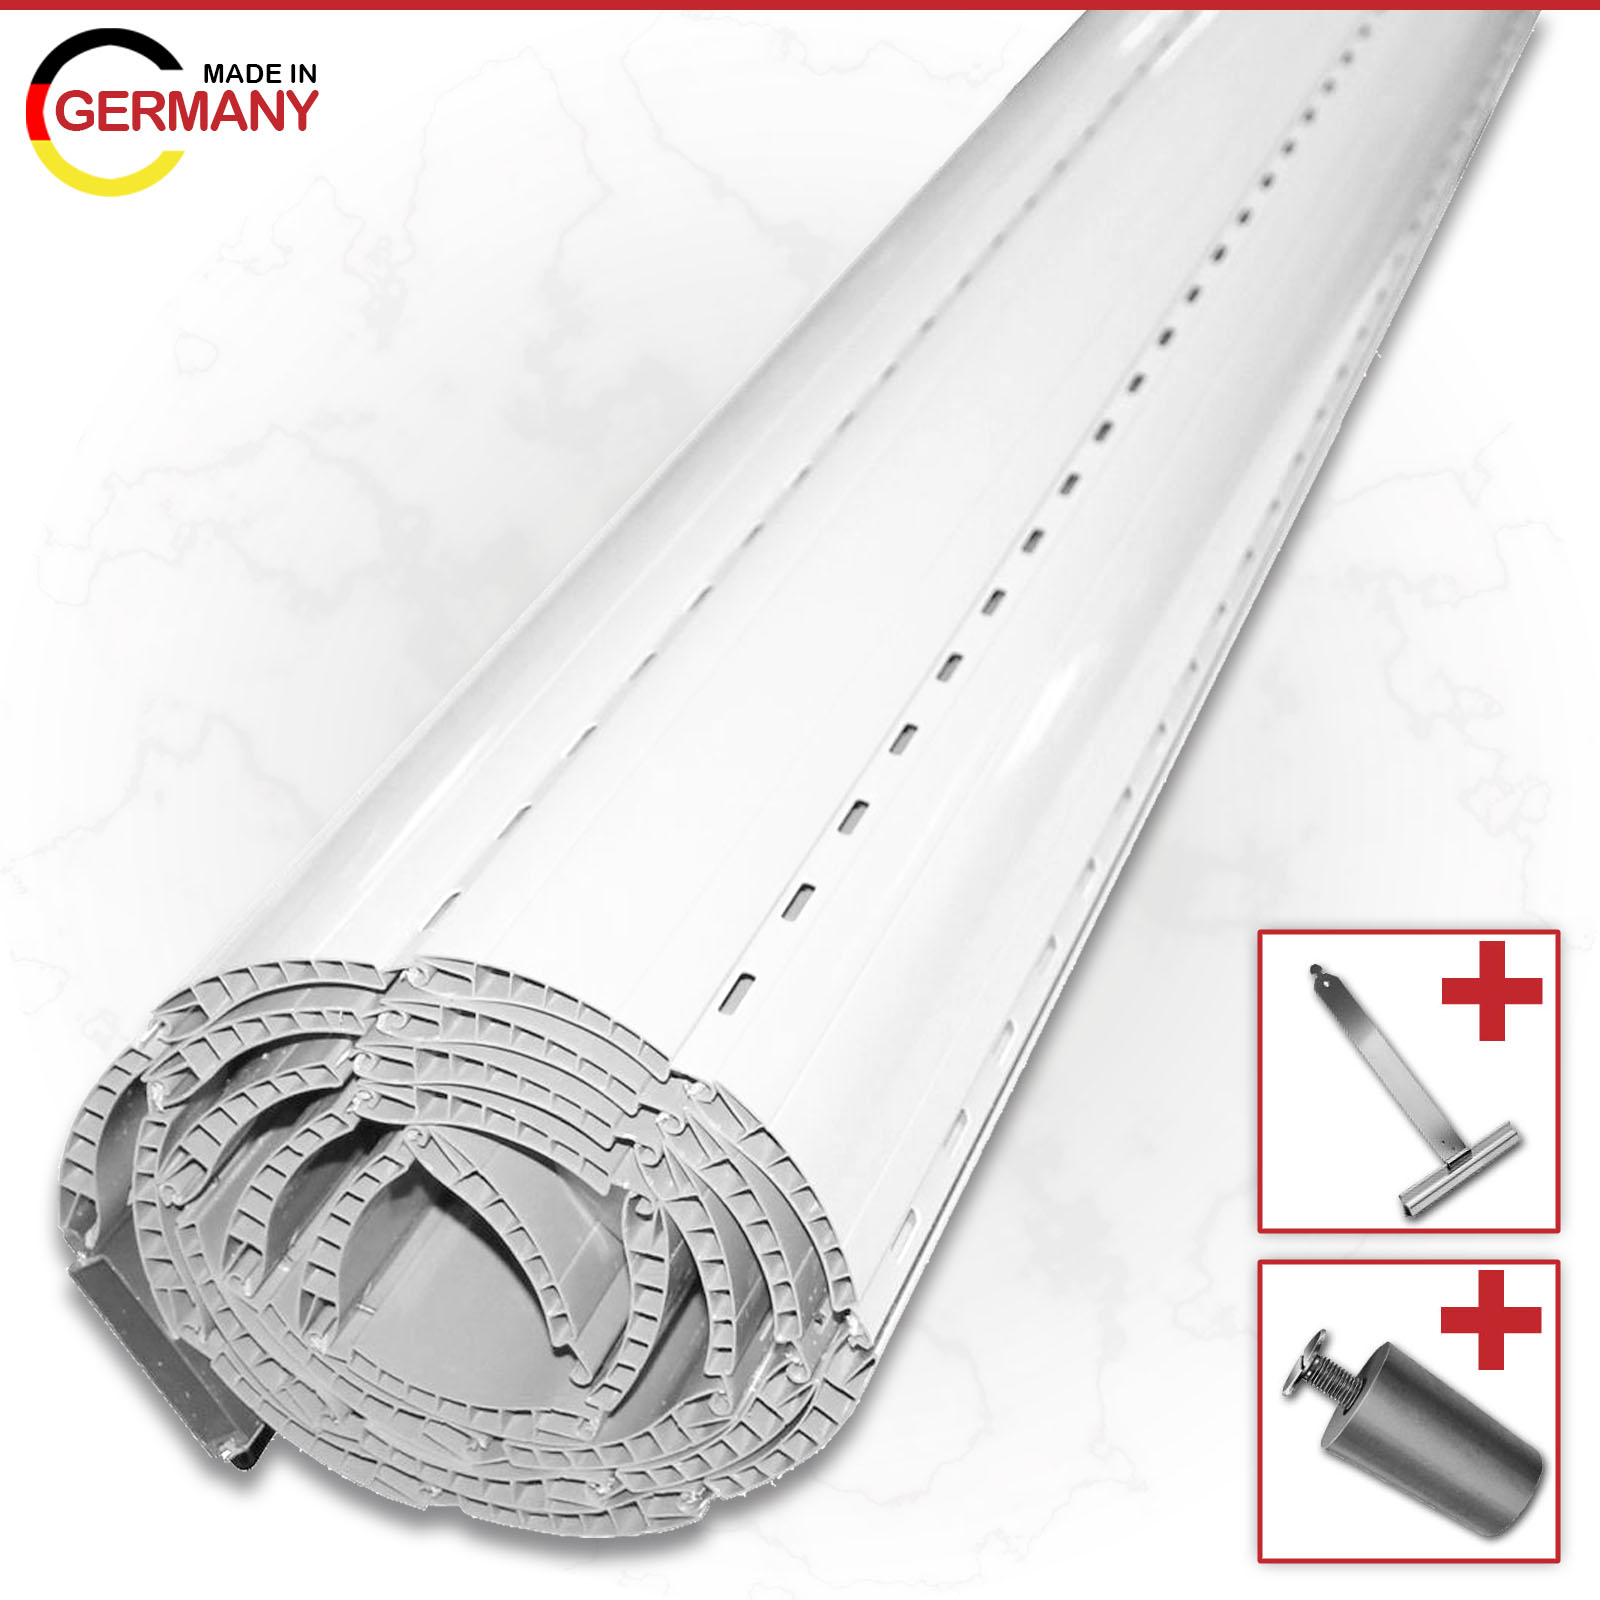 Rollladen Behang PVC 52 mm | Profil BE52